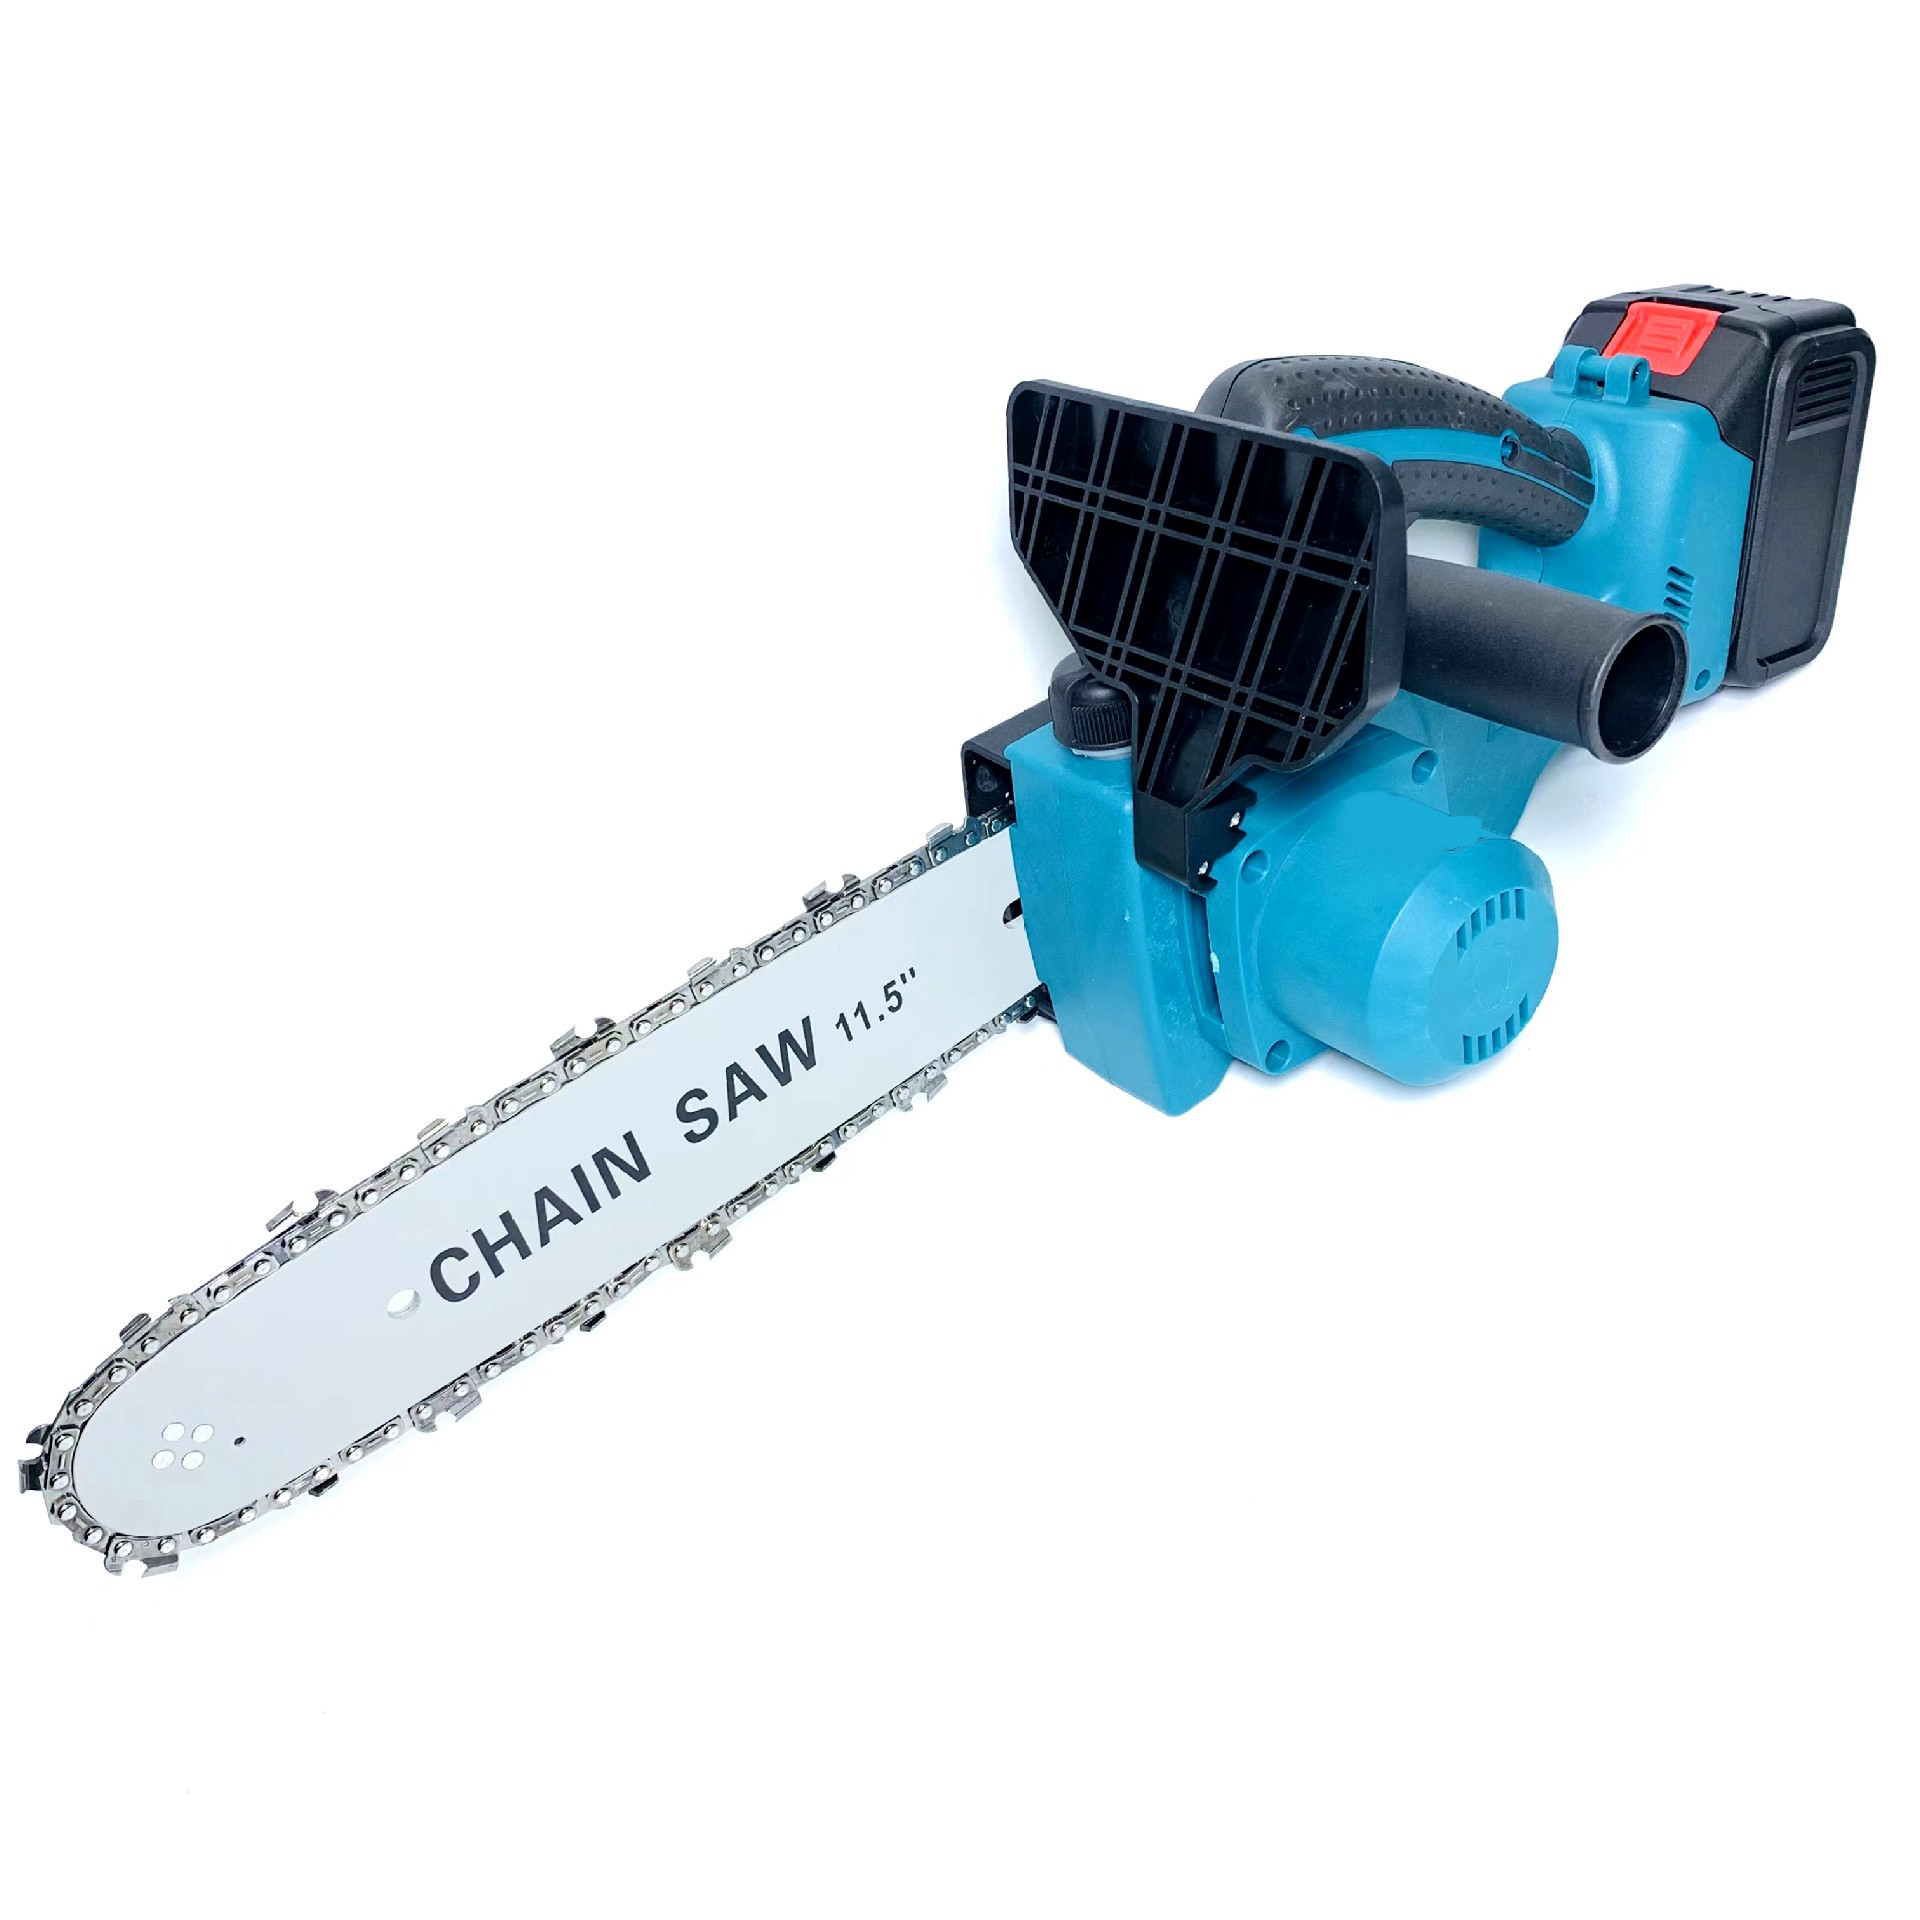 12inch chainsaw